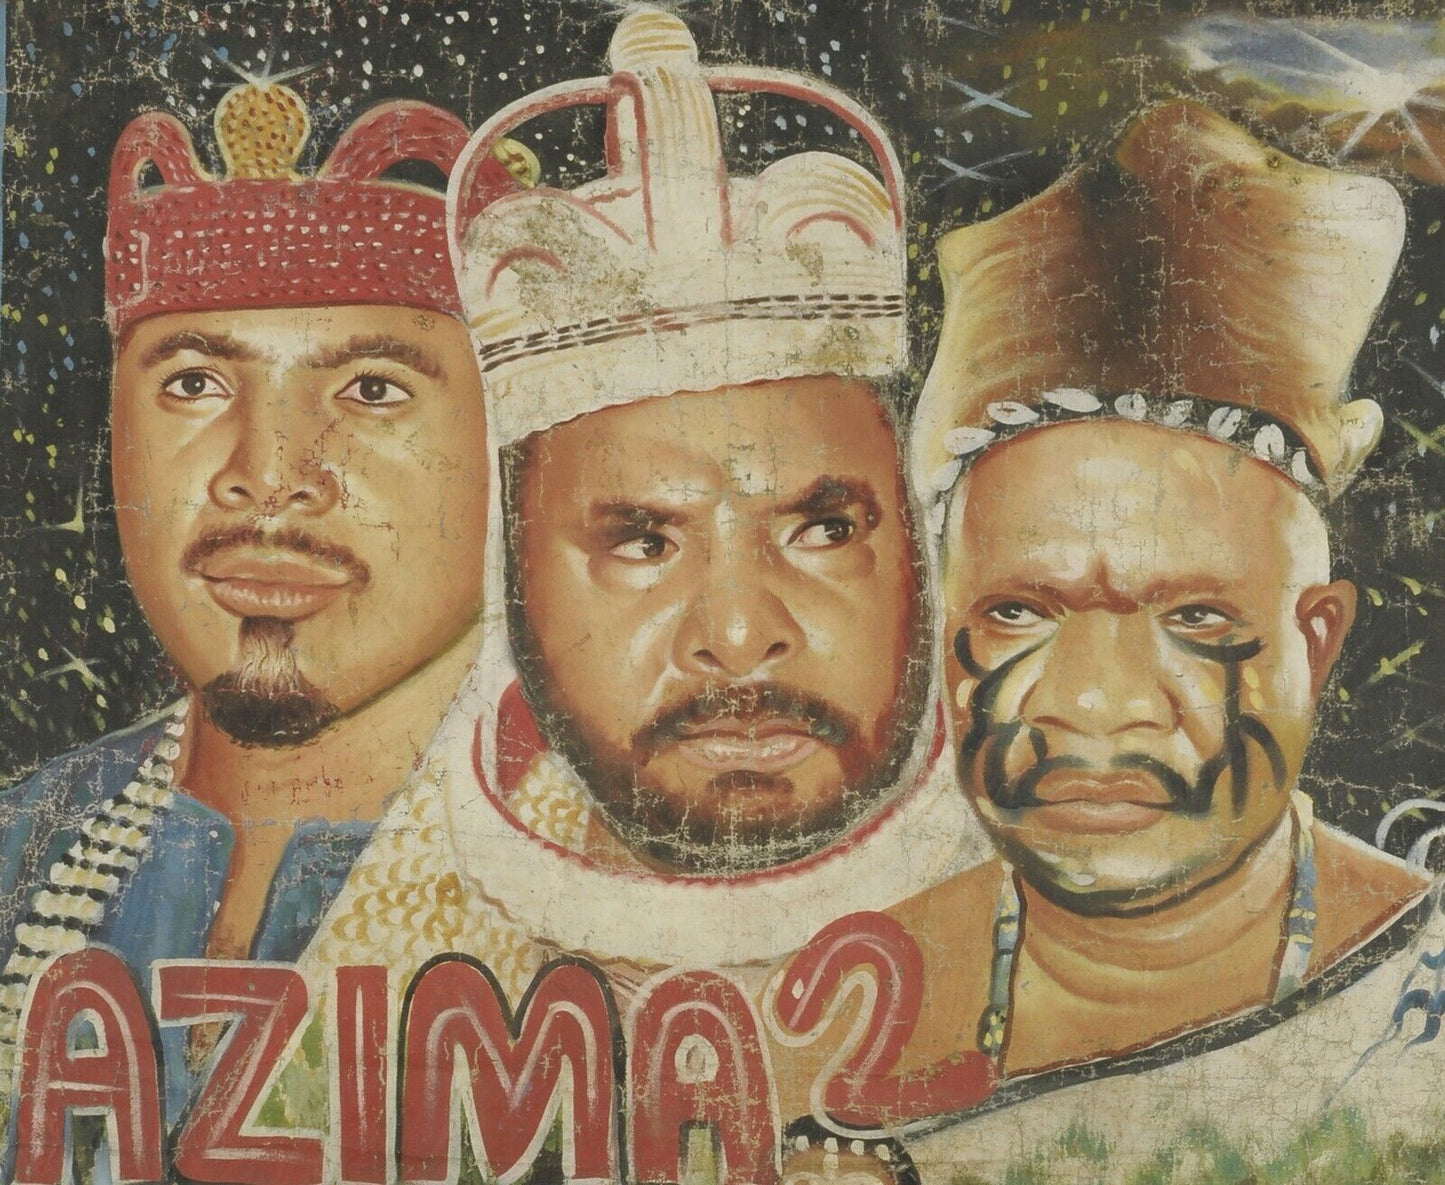 Hand painted Movie Cinema poster Ghana African Art flour sack canvas Art Azima 2 - Tribalgh